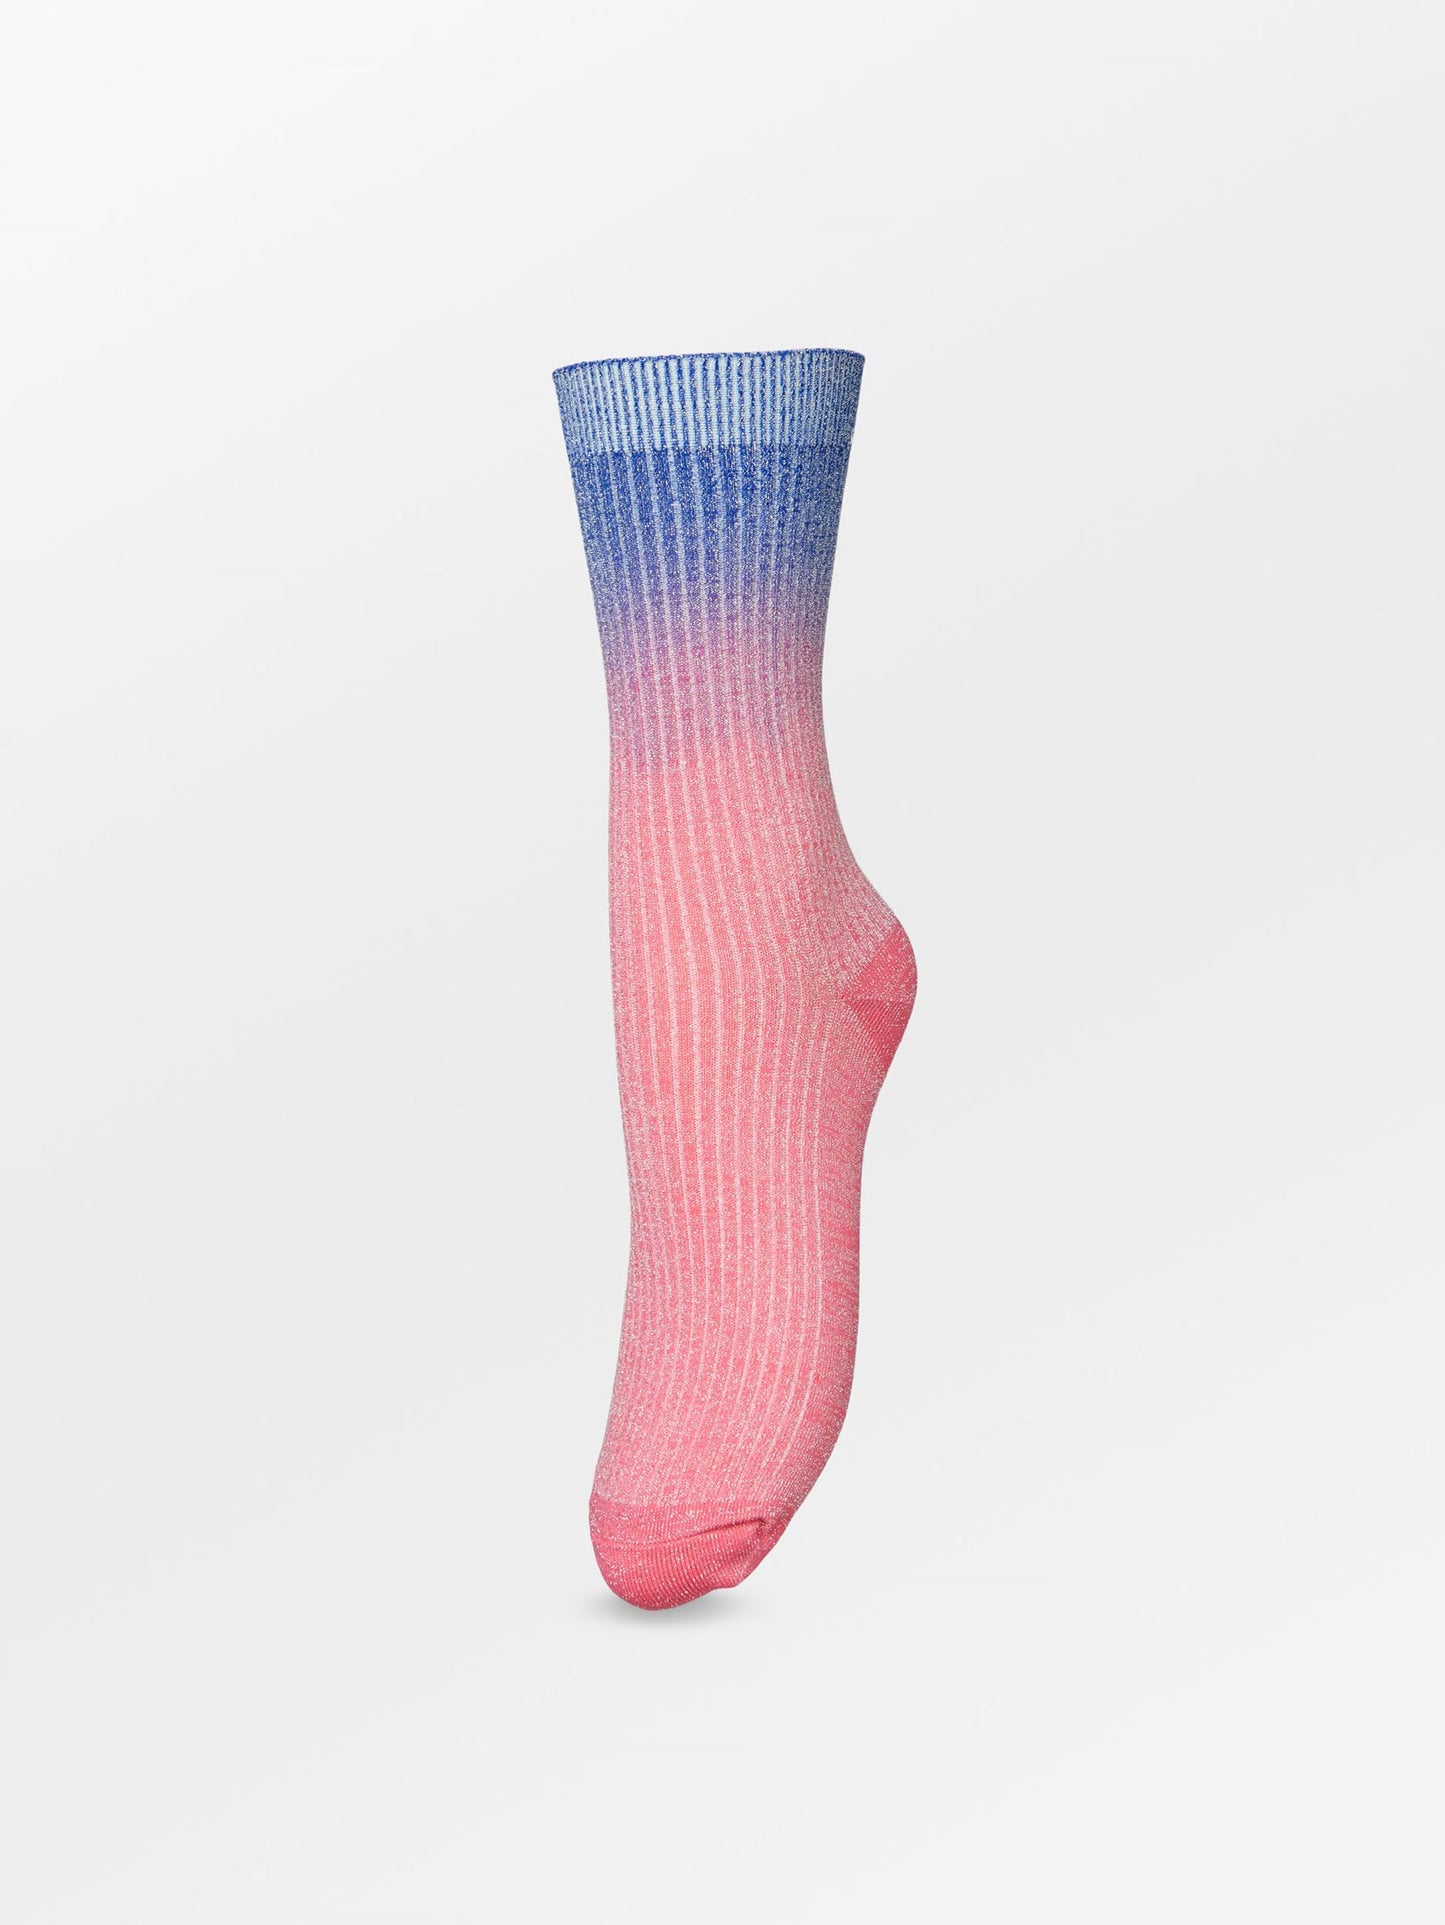 Becksöndergaard, Gradiant Glitter Sock - Hot Pink, socks, archive, sale, socks